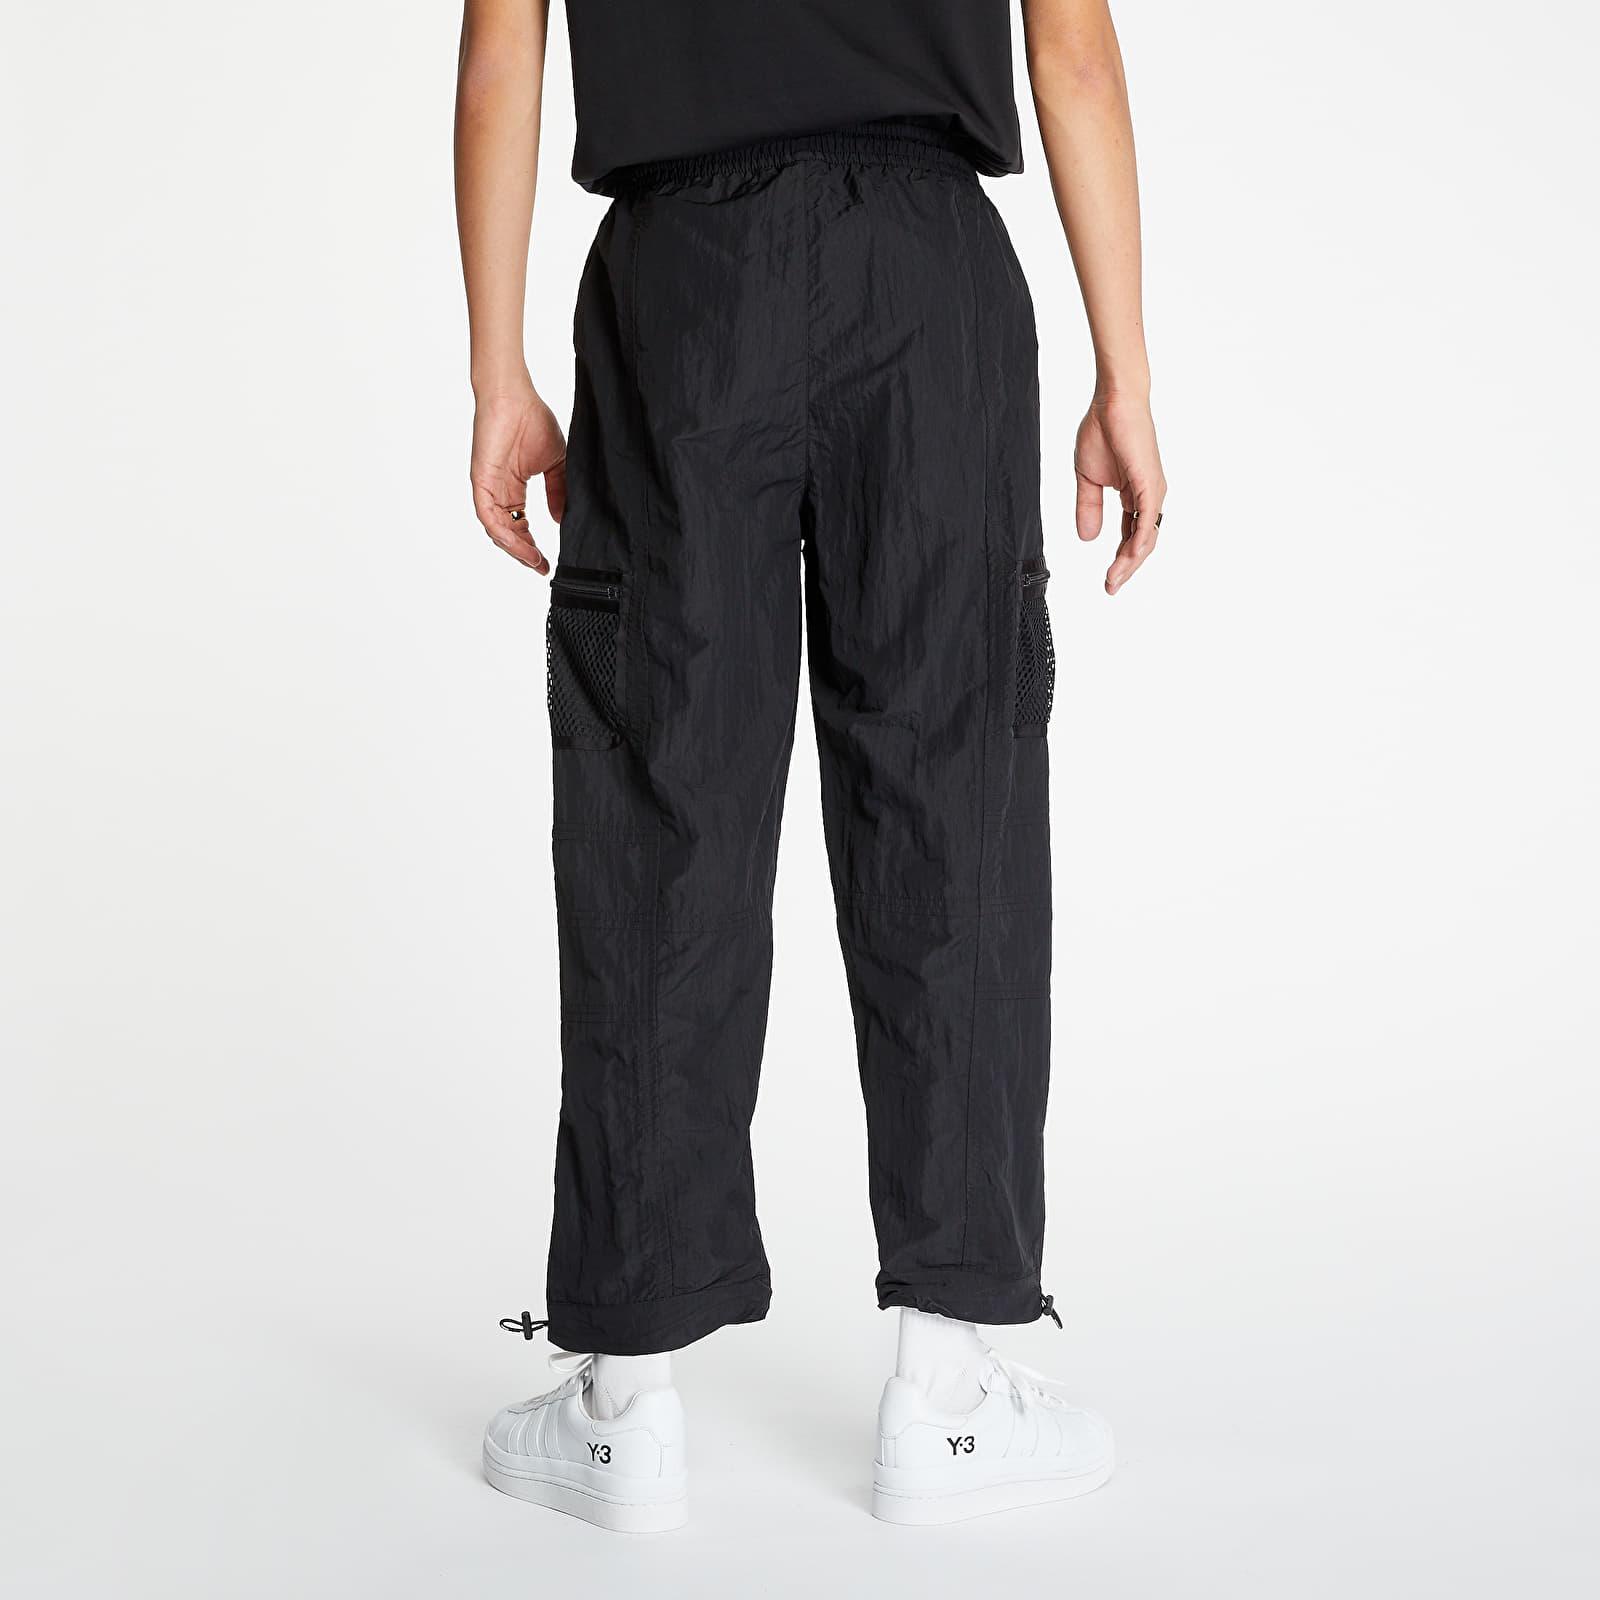 adidas Originals Adidas Adventure Woven Cargo Pants Black for Men - Lyst